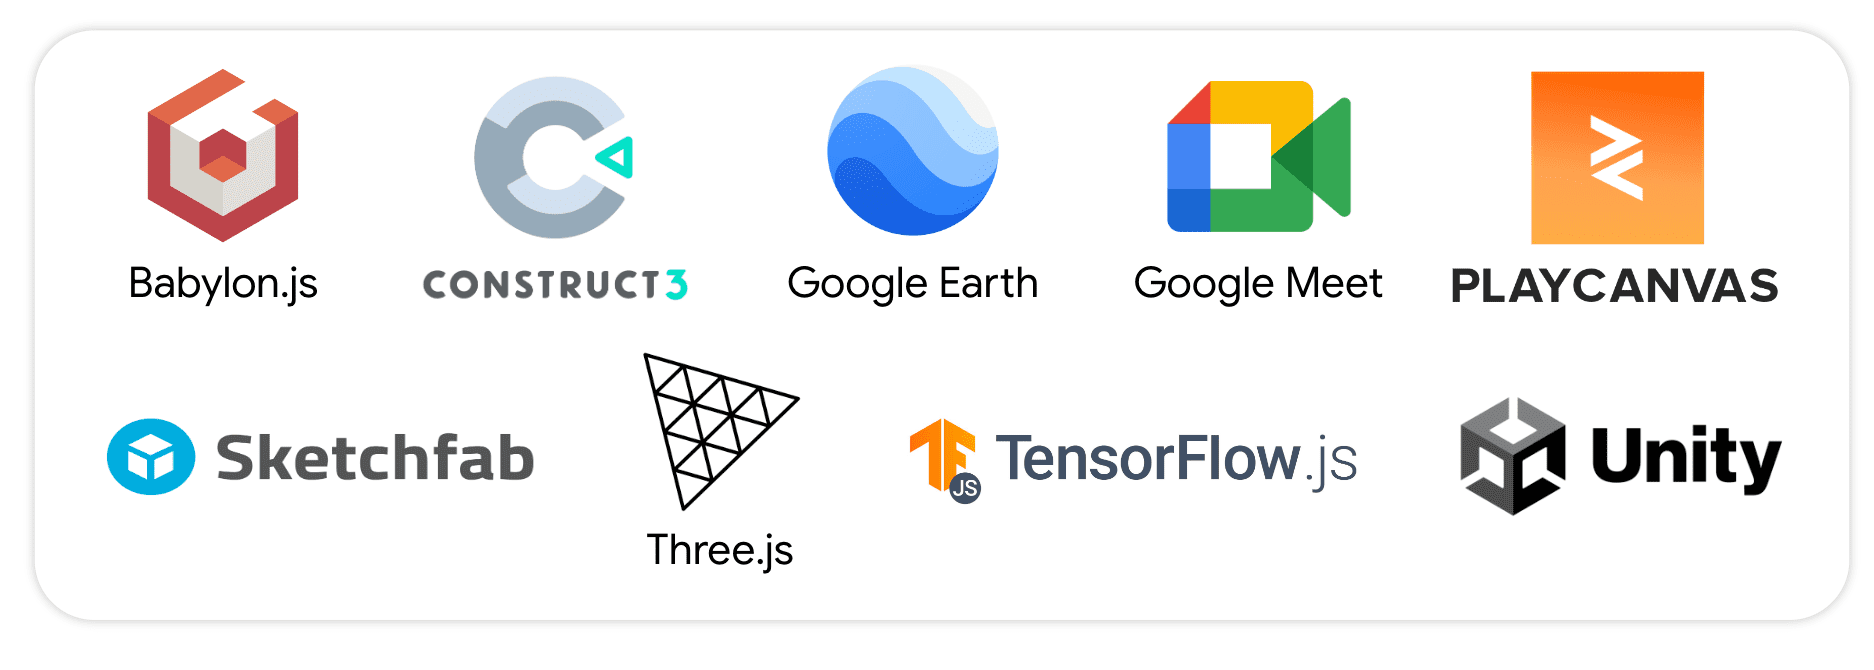 Babylon.js, Build 3, Google Earth, Google Meet, PlayCanvas, Sketchfab, Three.JS, TensorFlow.js và Unity.